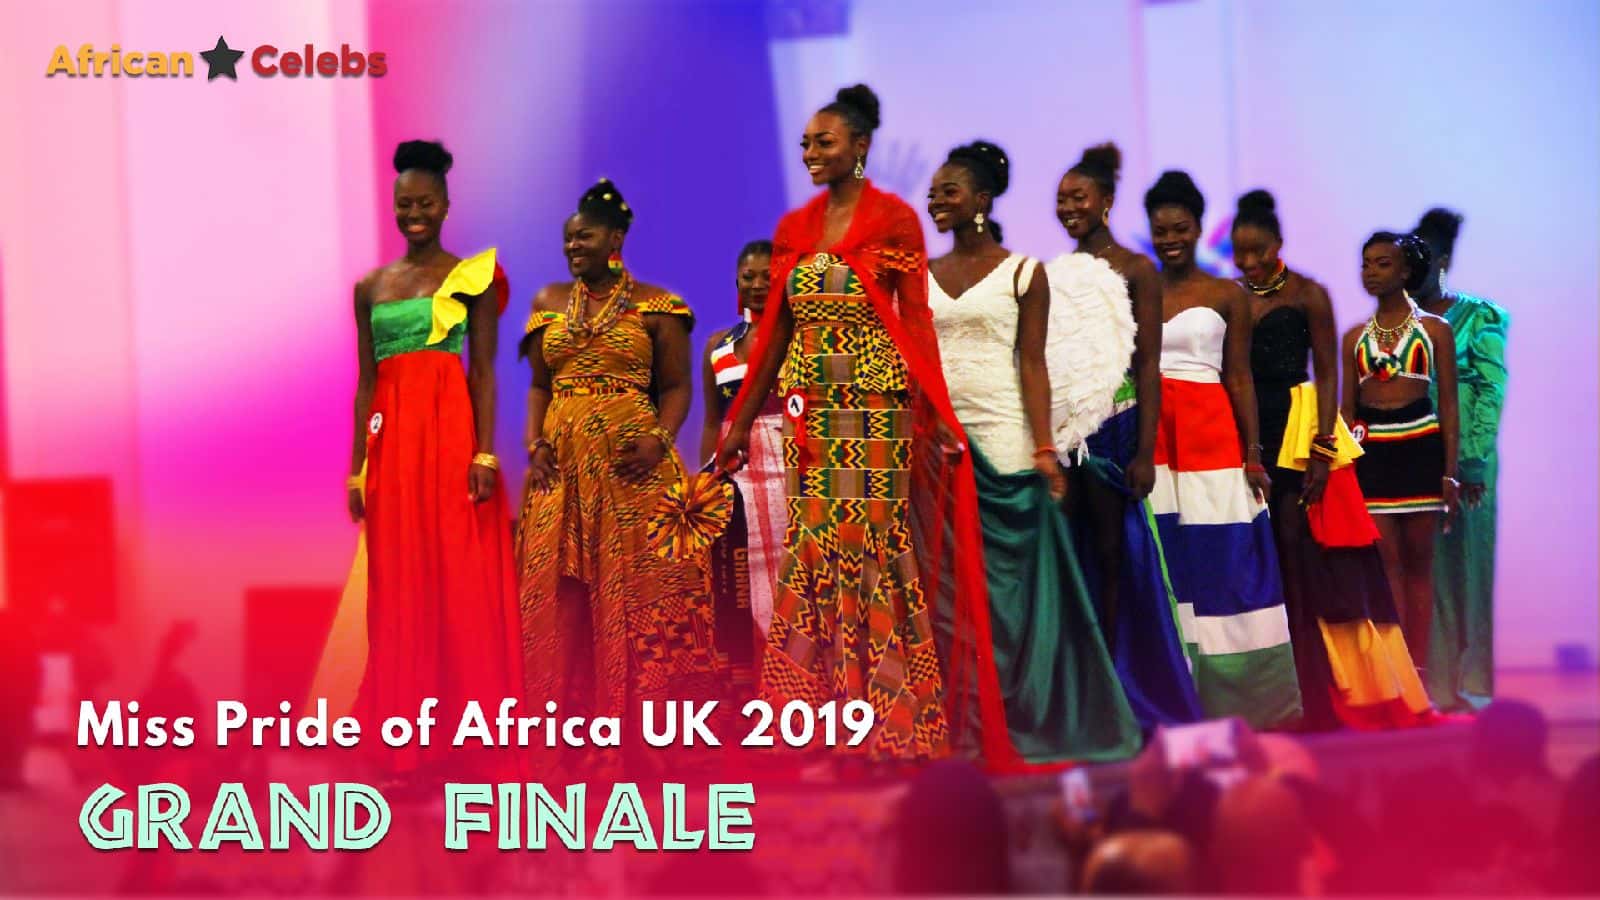 African Celebs Miss Pride of Africa UK 2019 Grand Finale